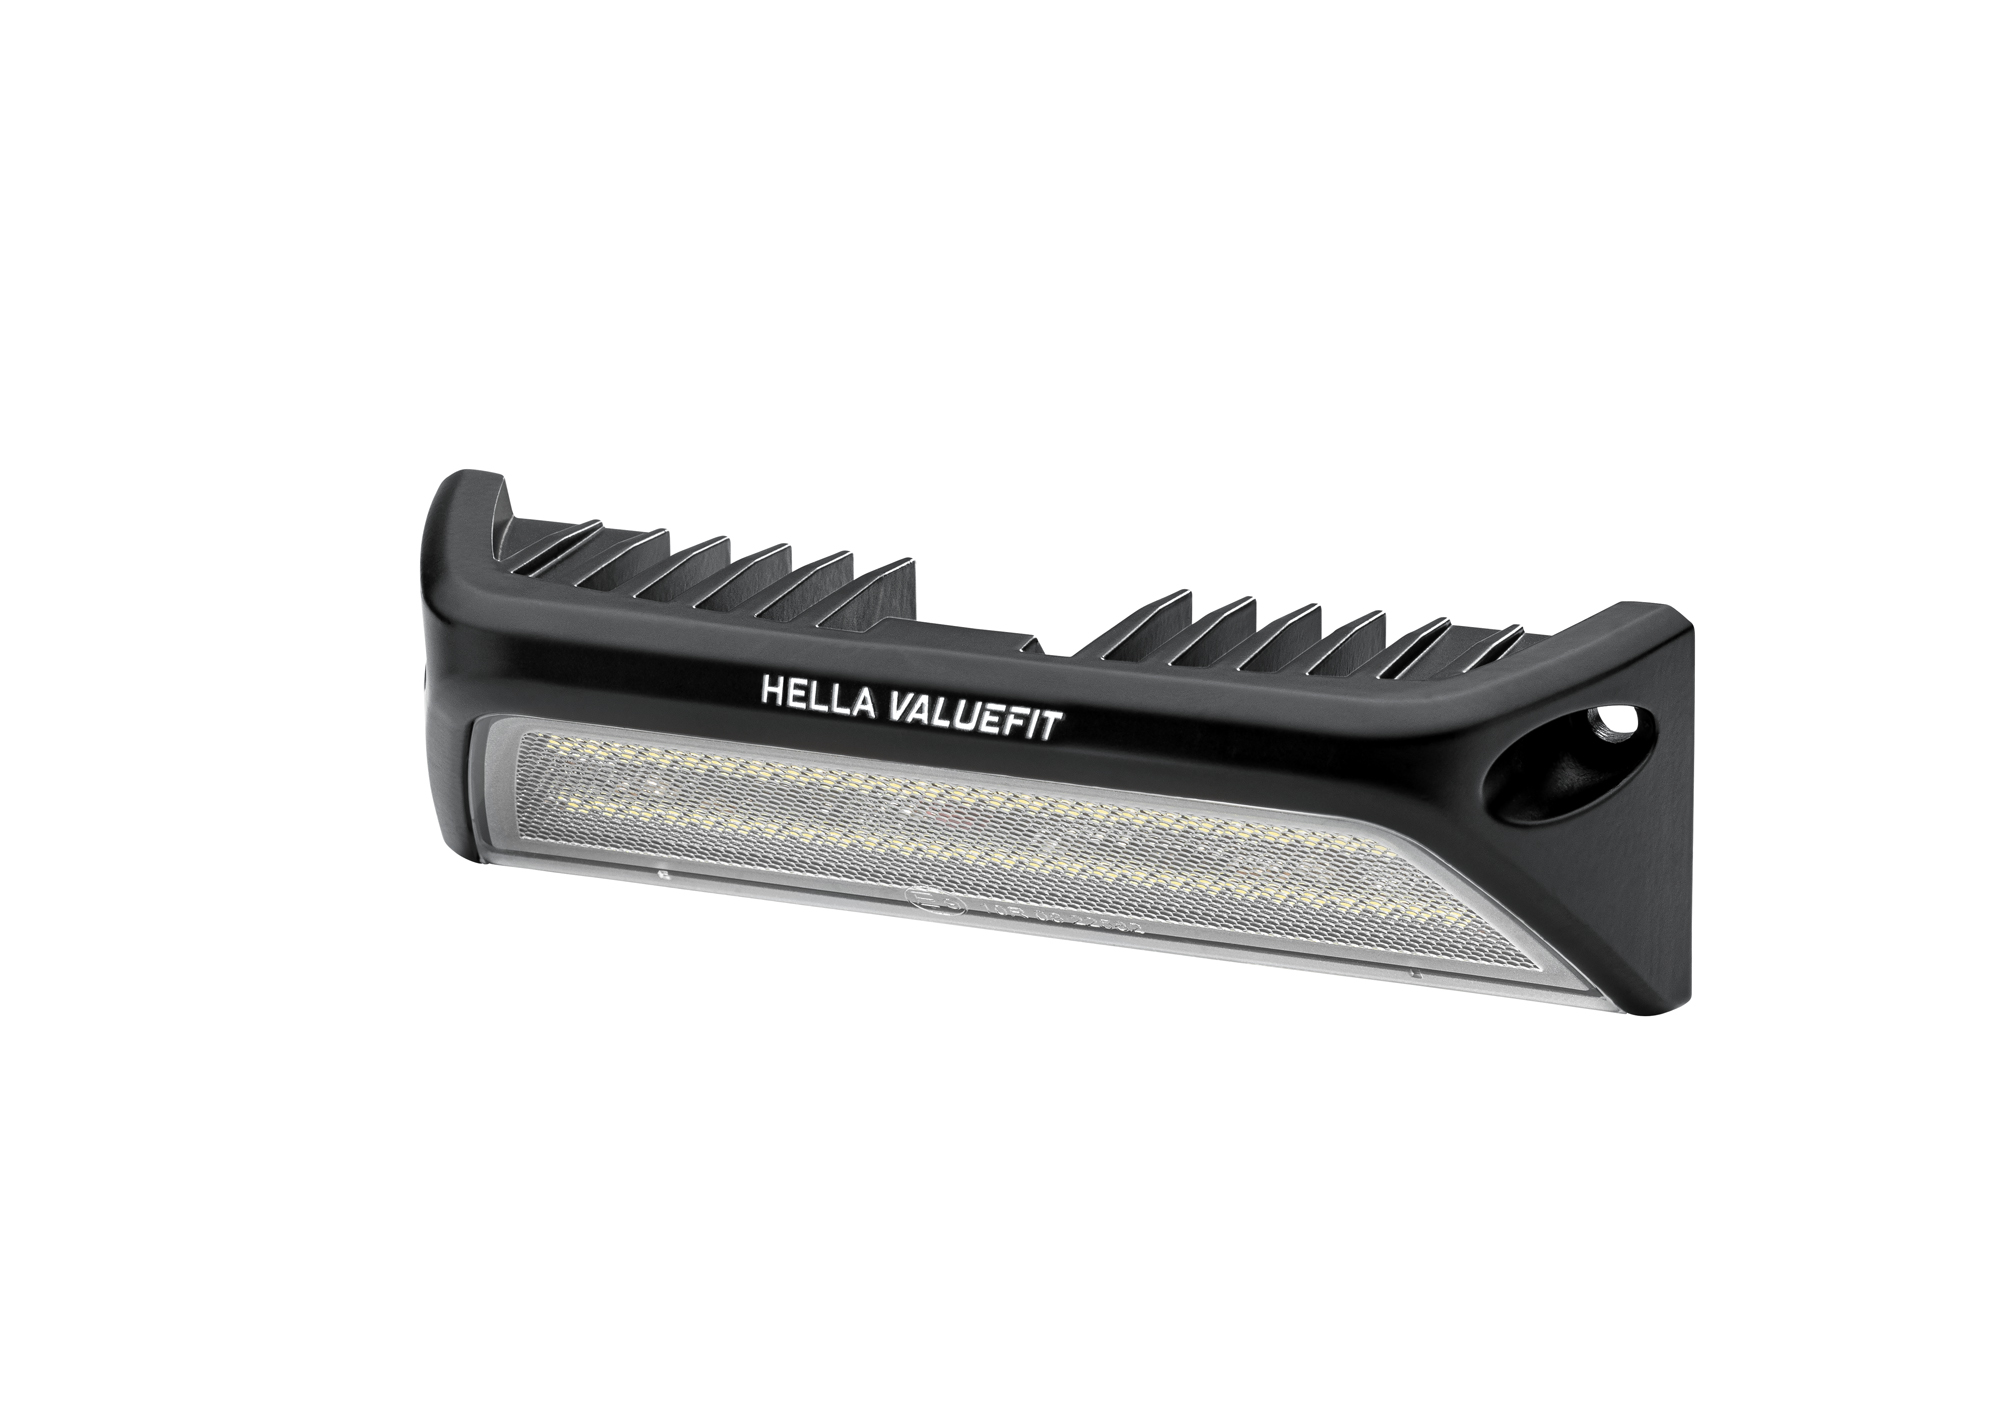 HELLA VALUEFIT SMS2000 SCENE LIGHT Auxiliary LED Work Light